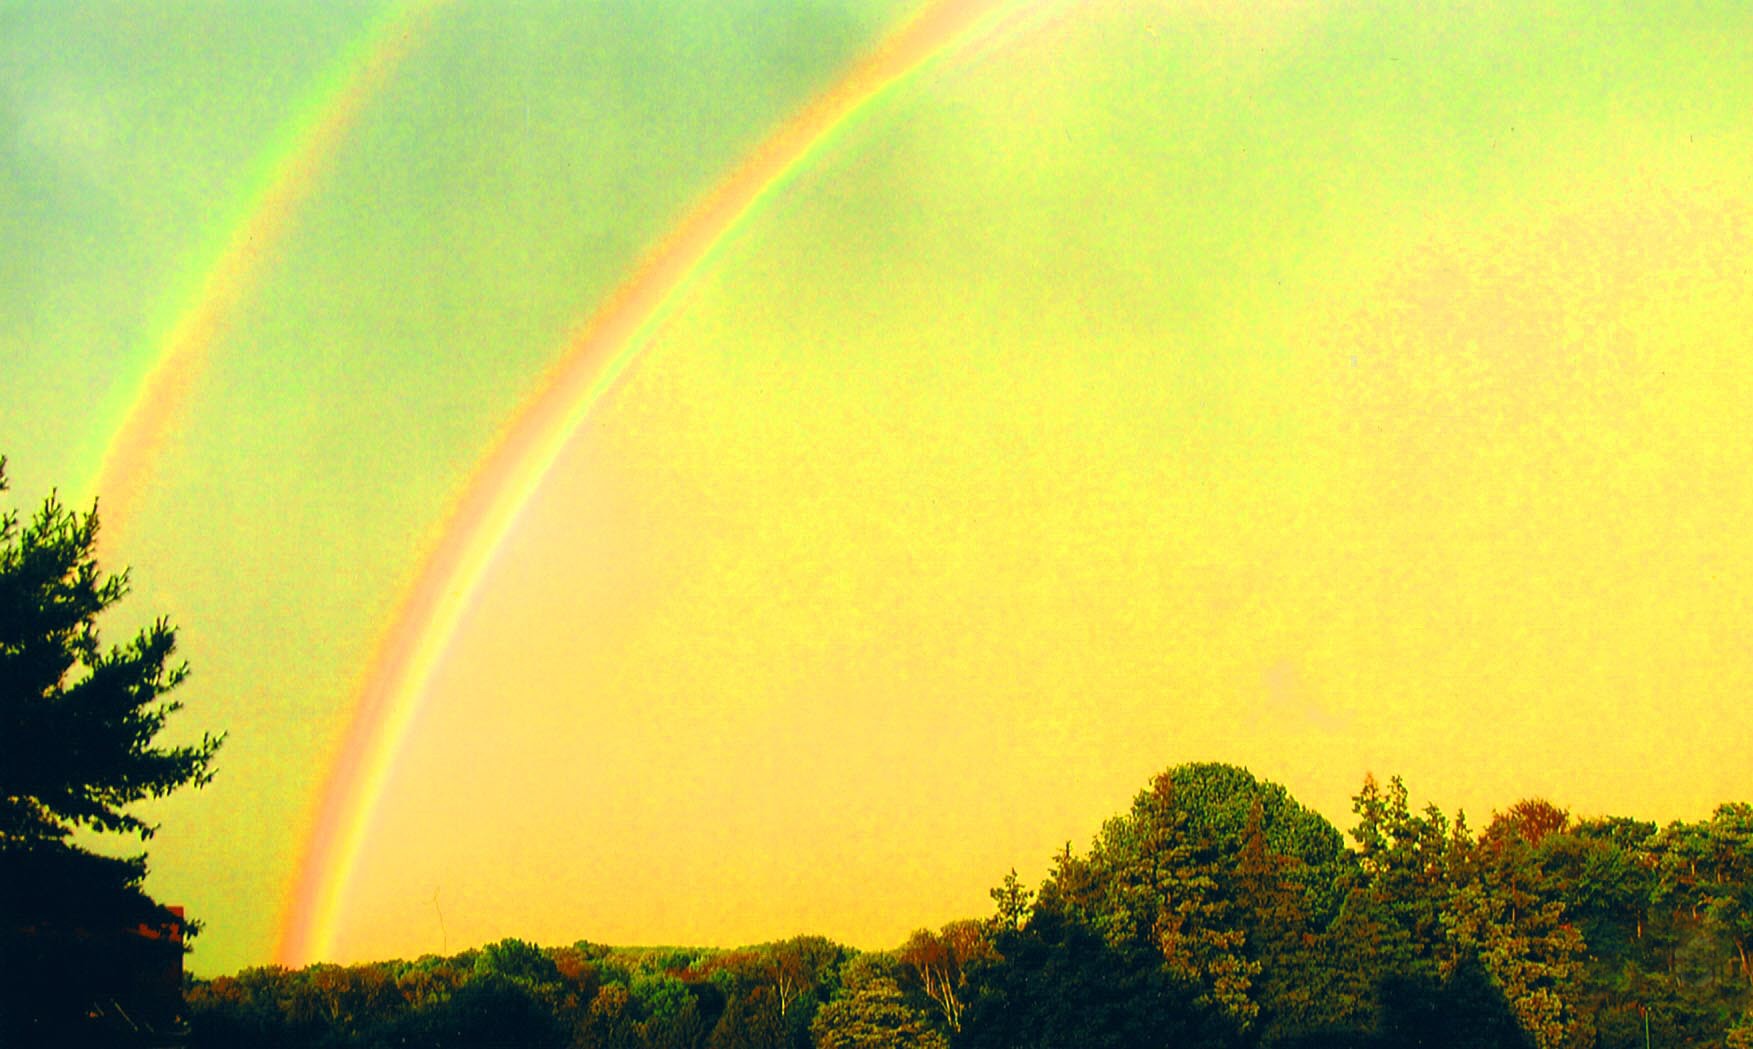 The double rainbows